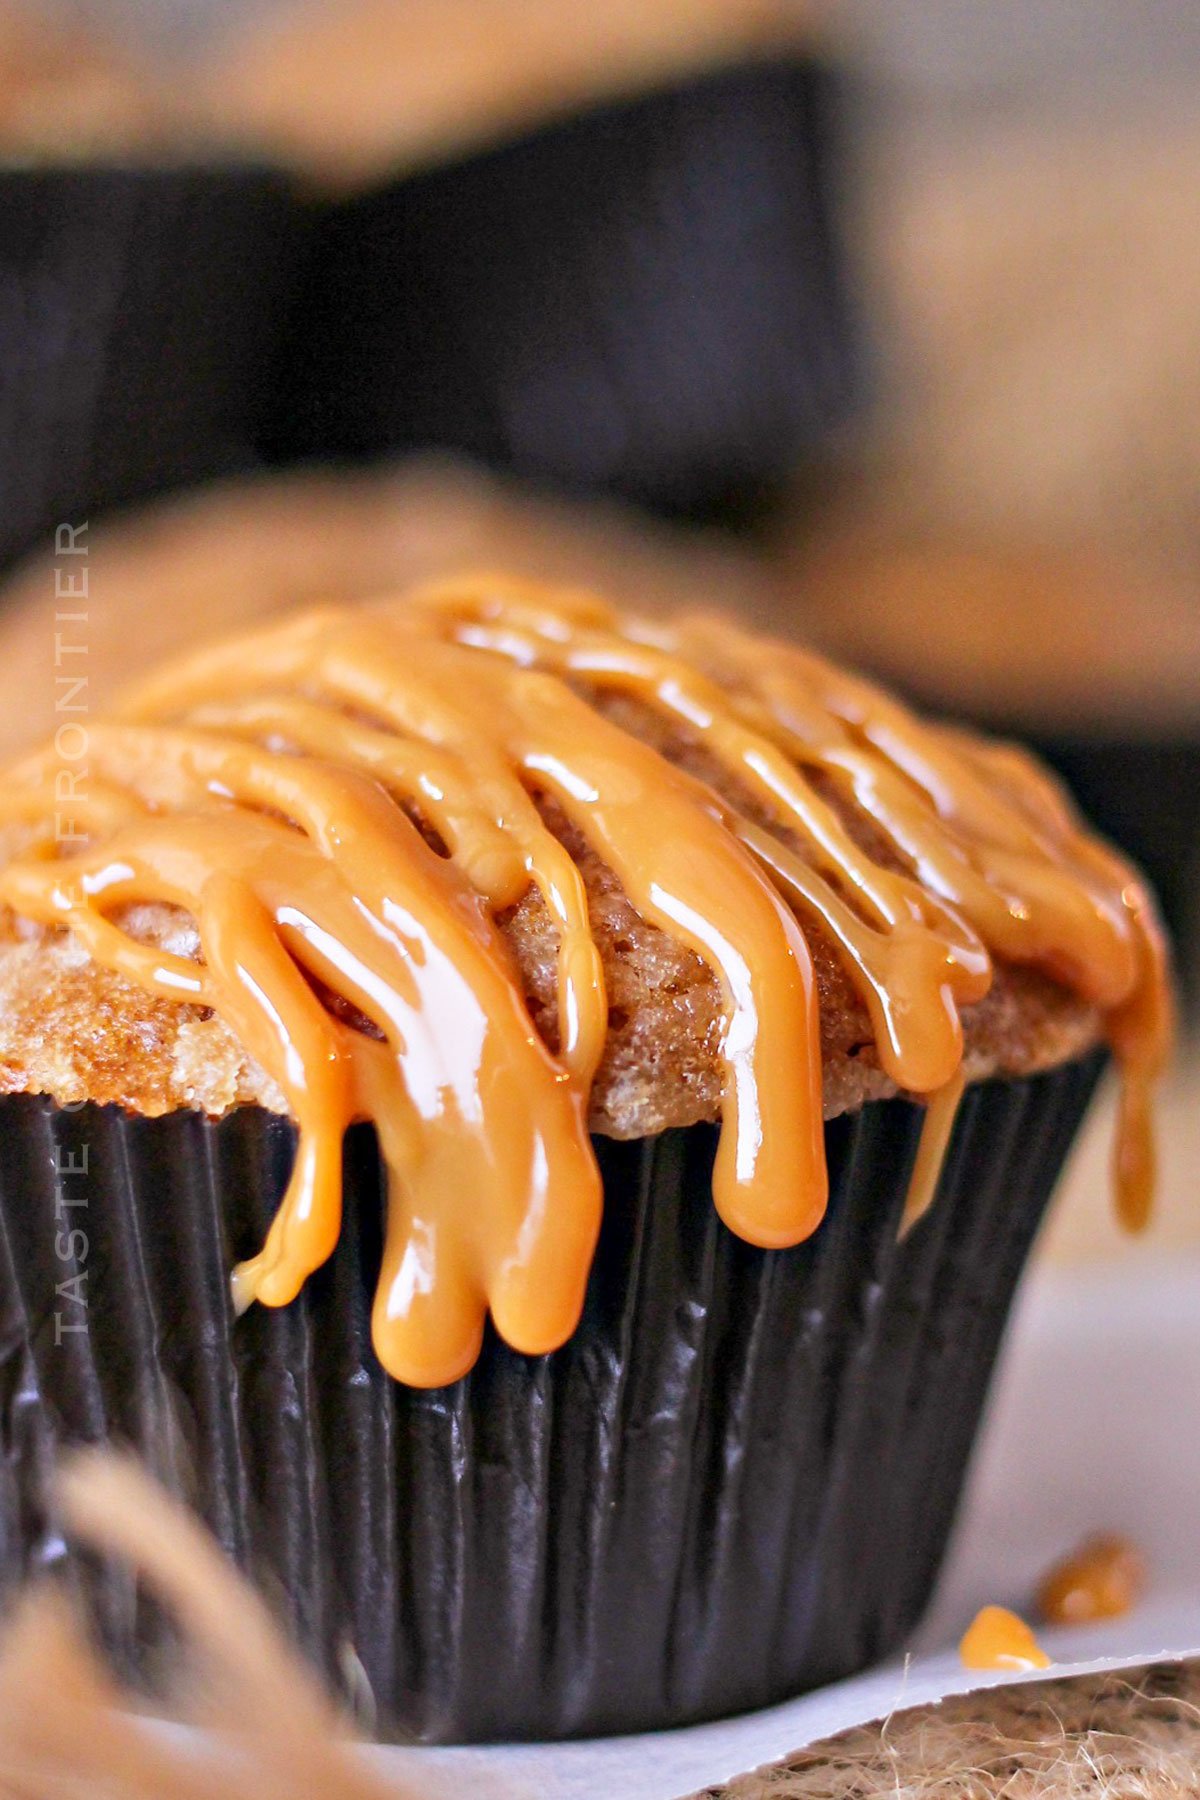 caramel on a muffin